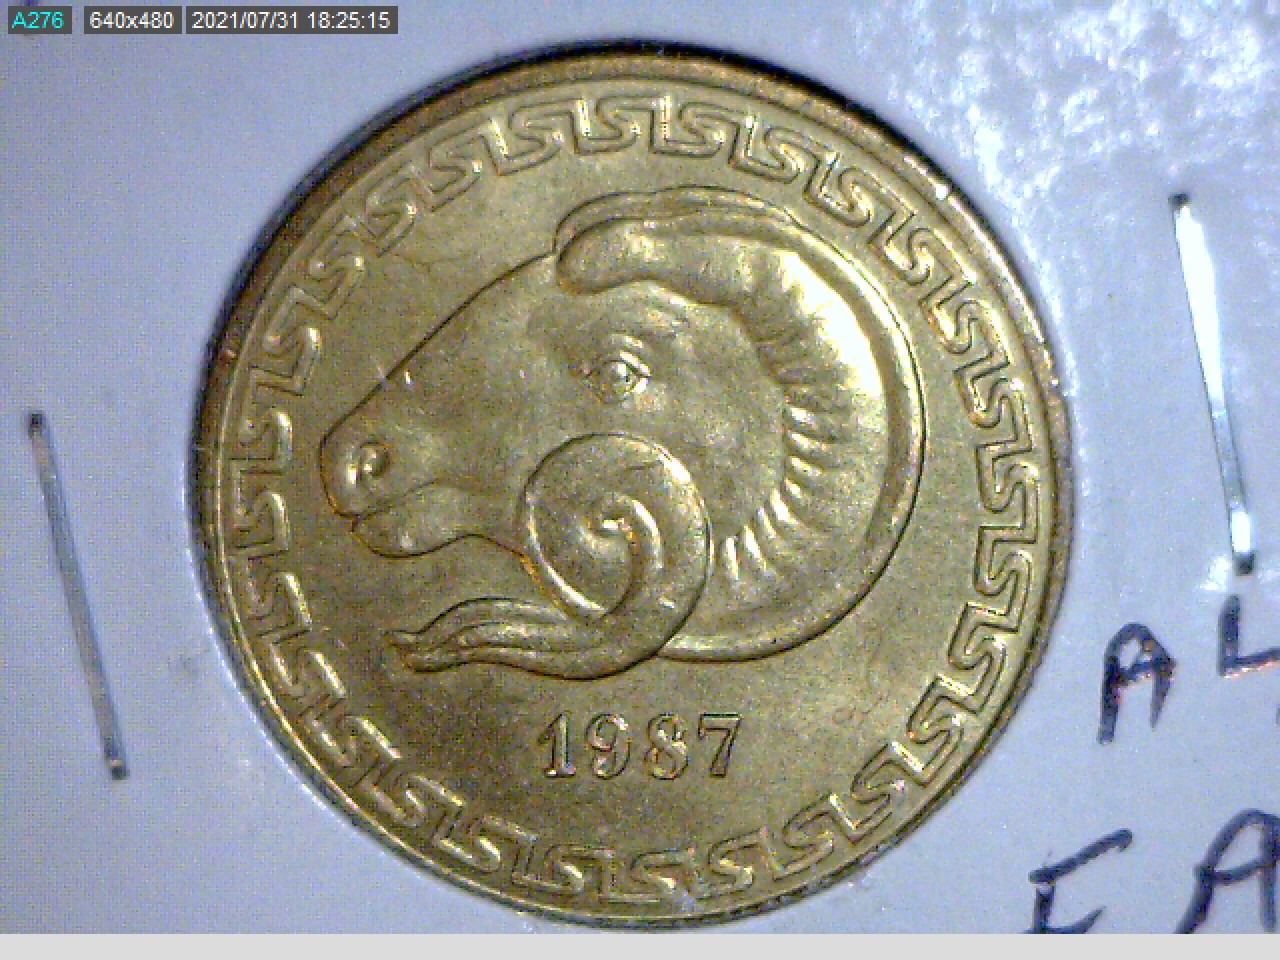 Algeria Republic 20 Centimes 1987 Obv.jpg